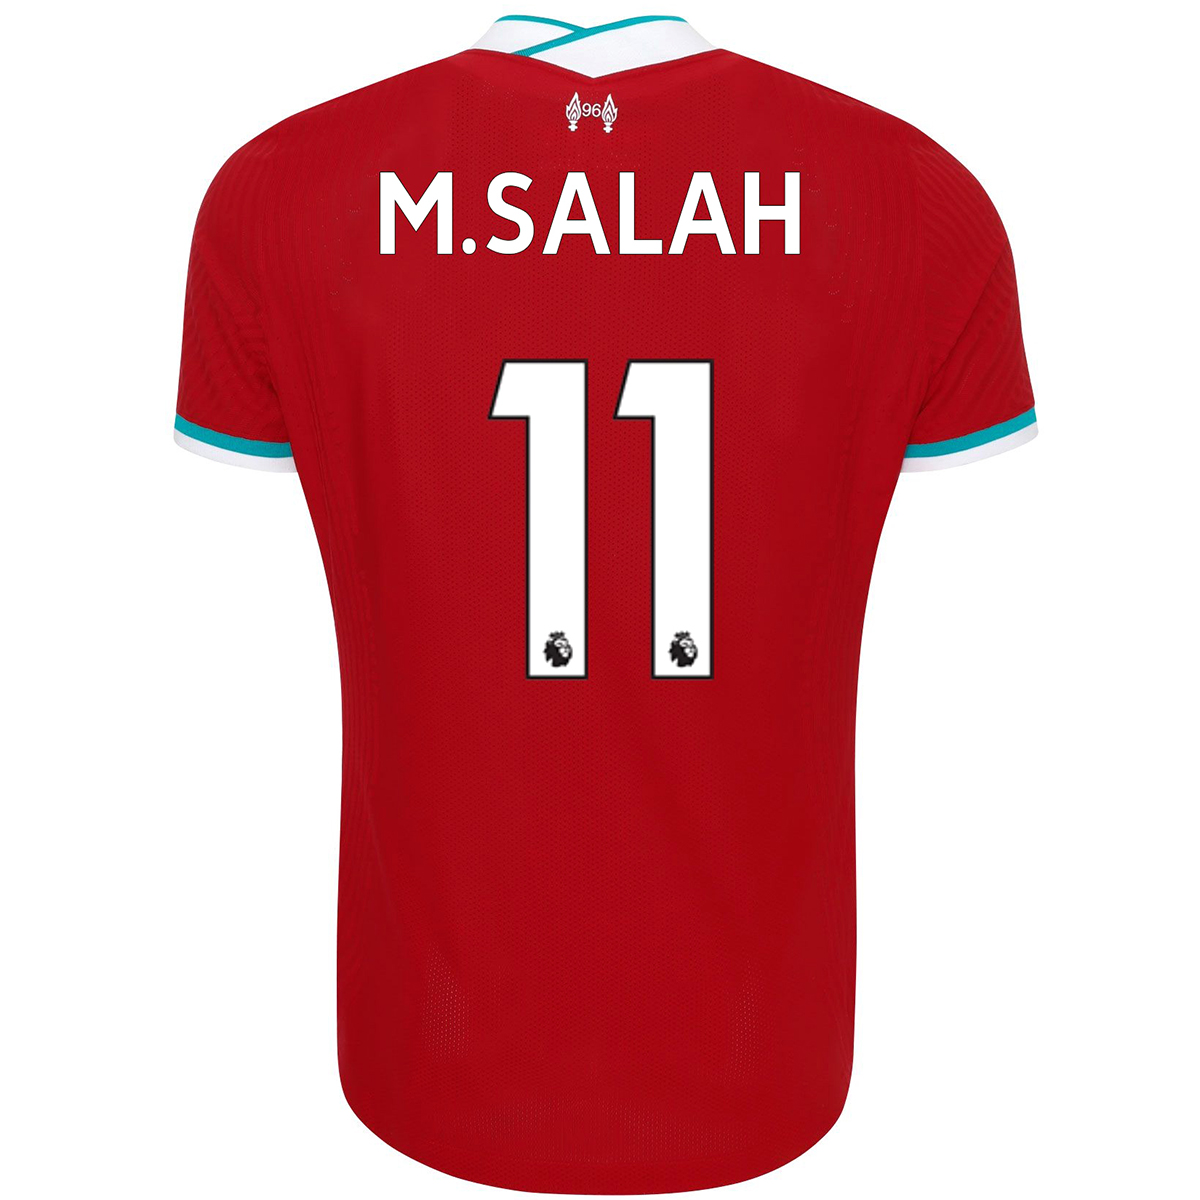 M.SALAH orginalt premier league trykk (navn og nummer)